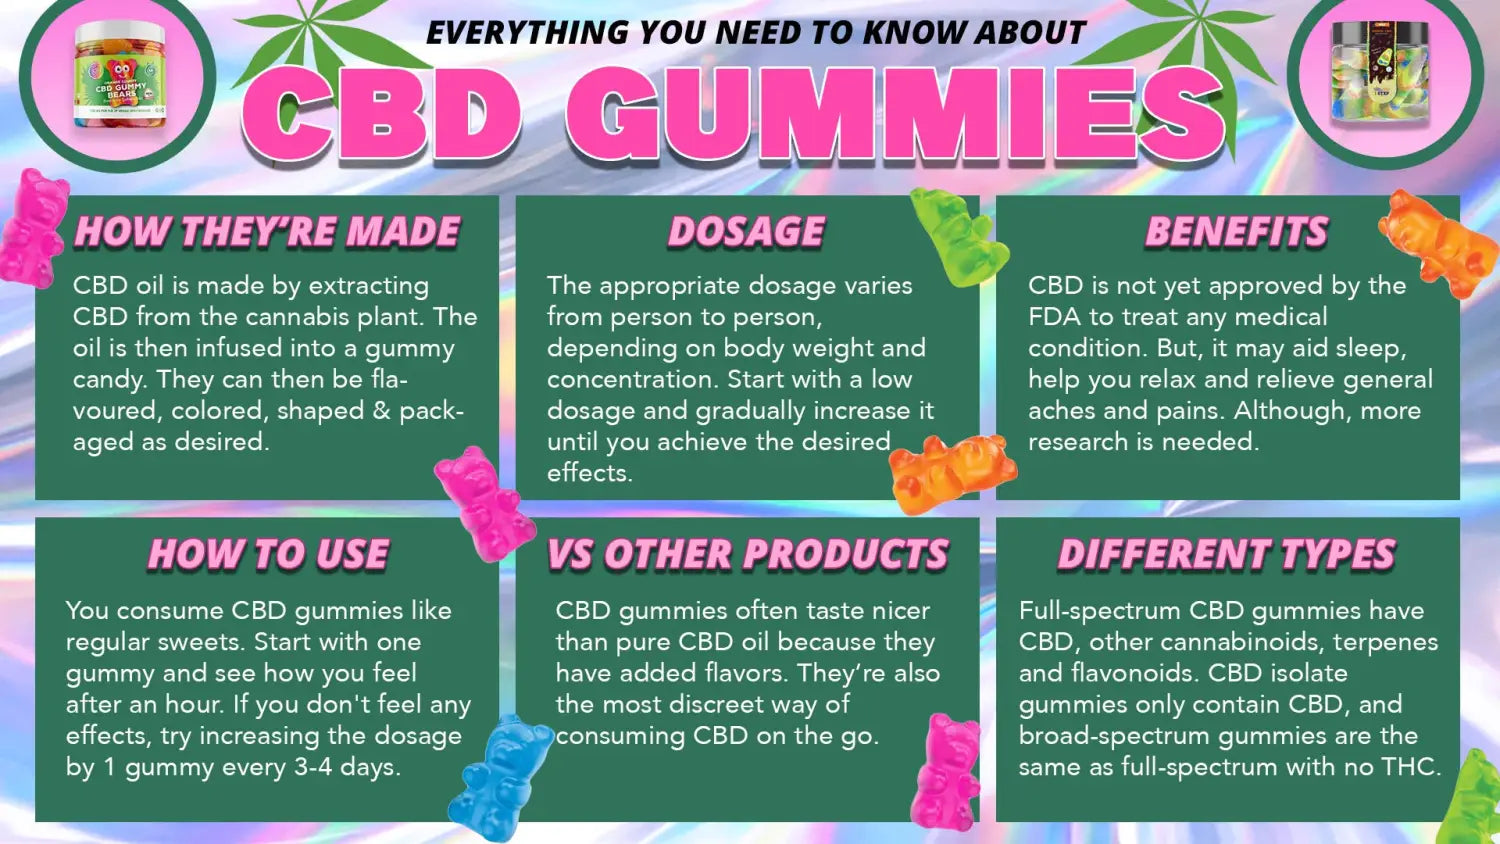 What Type of CBD Do CBD Gummies Contain?